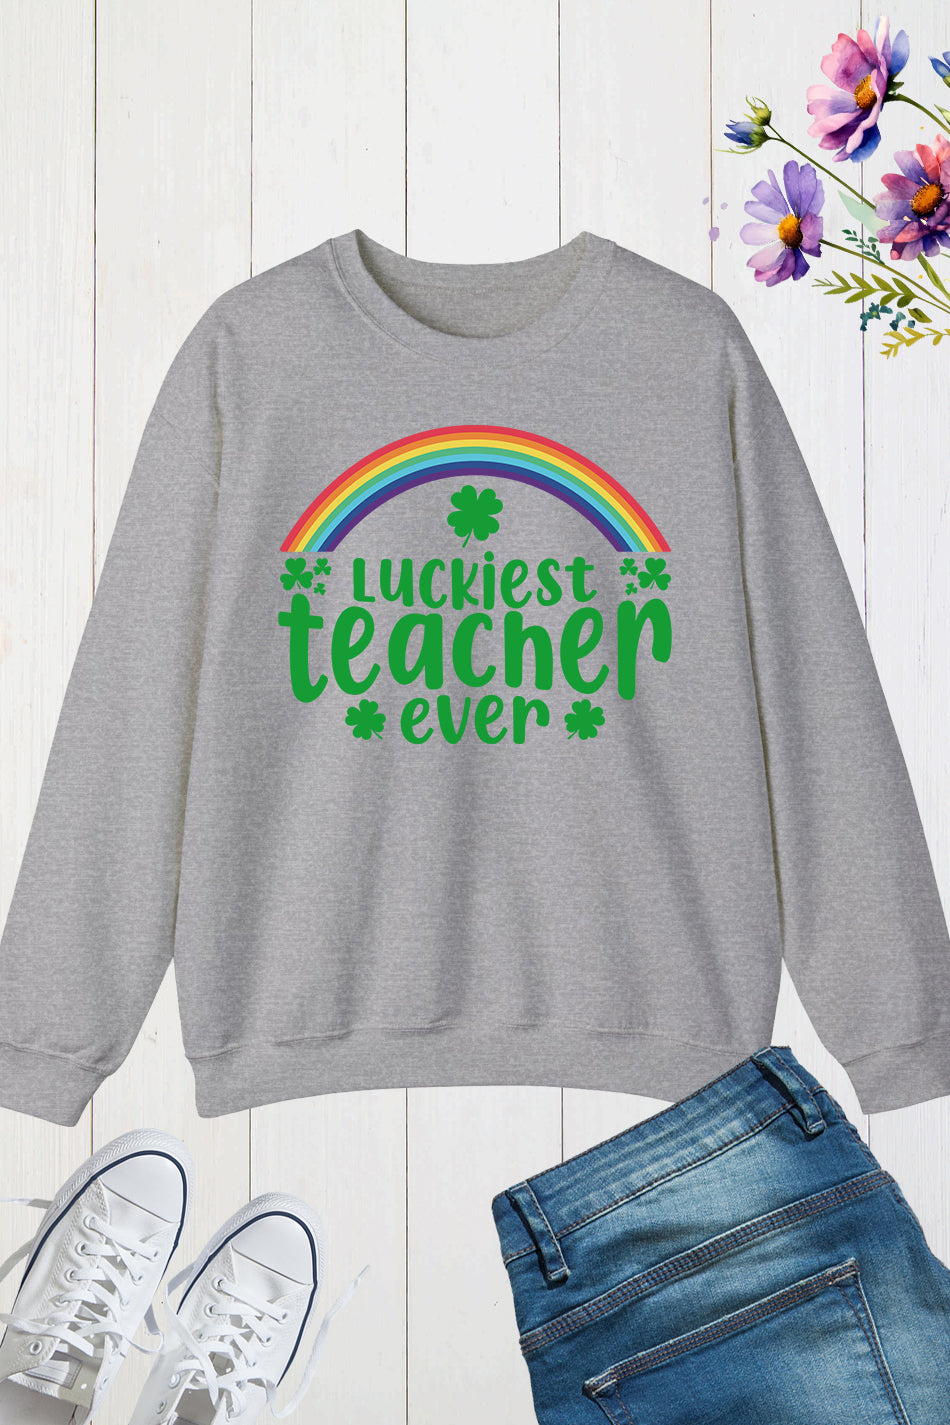 Luckiest teacher ever for St Patricks day Sweatshirt